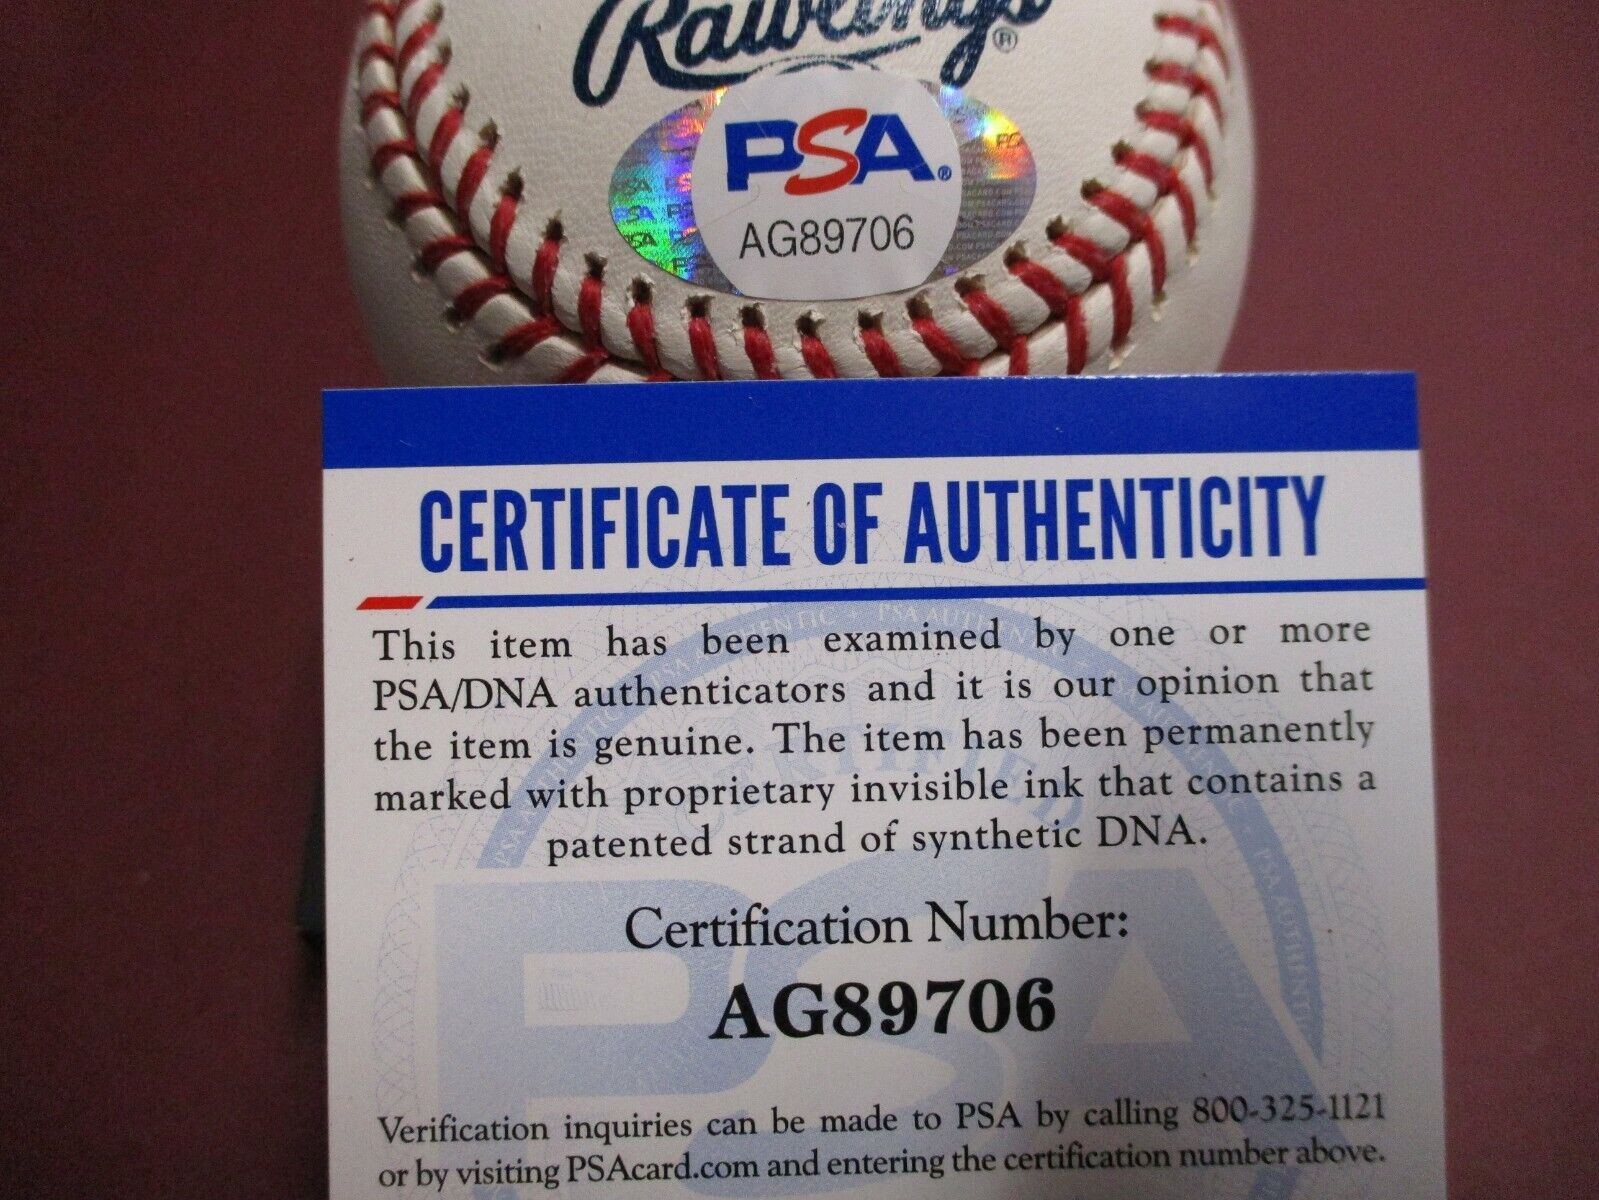 Tommy Hanson Atlanta Braves d 2015 Autographed Official Ball Signed Baseball PSA